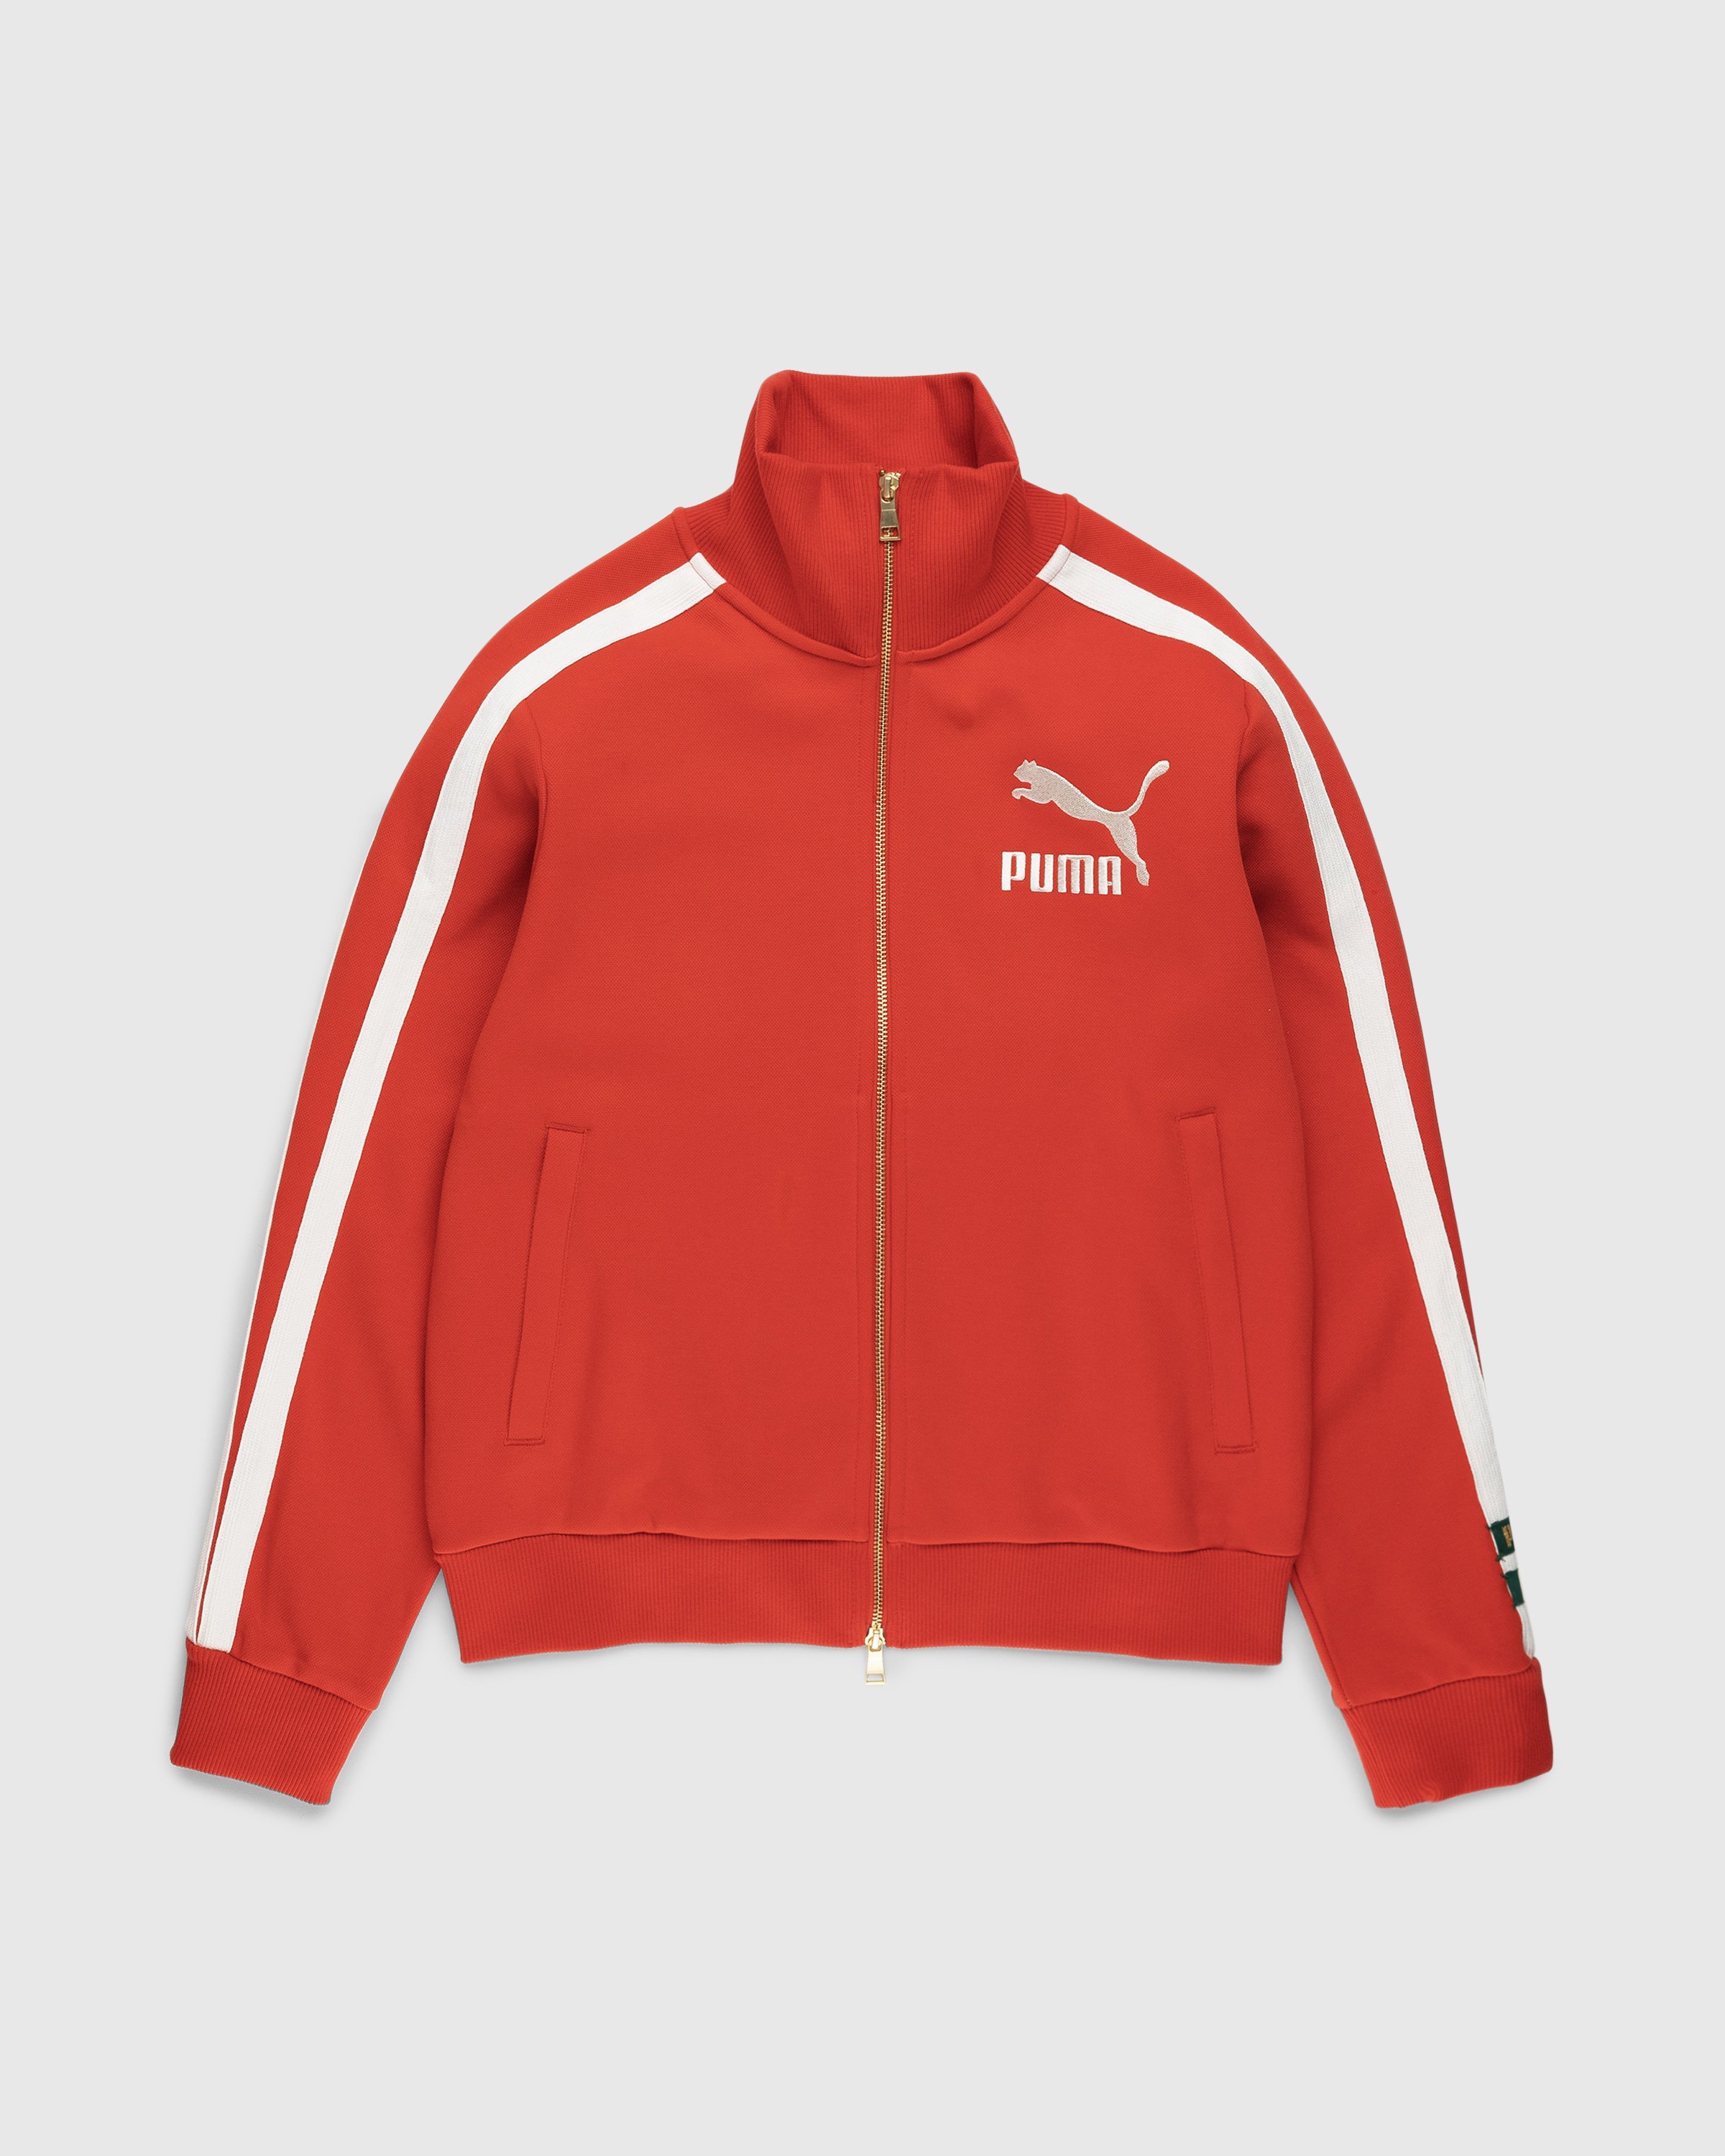 Puma x Rhuigi - T7 Track Top Red - Clothing - Red - Image 1